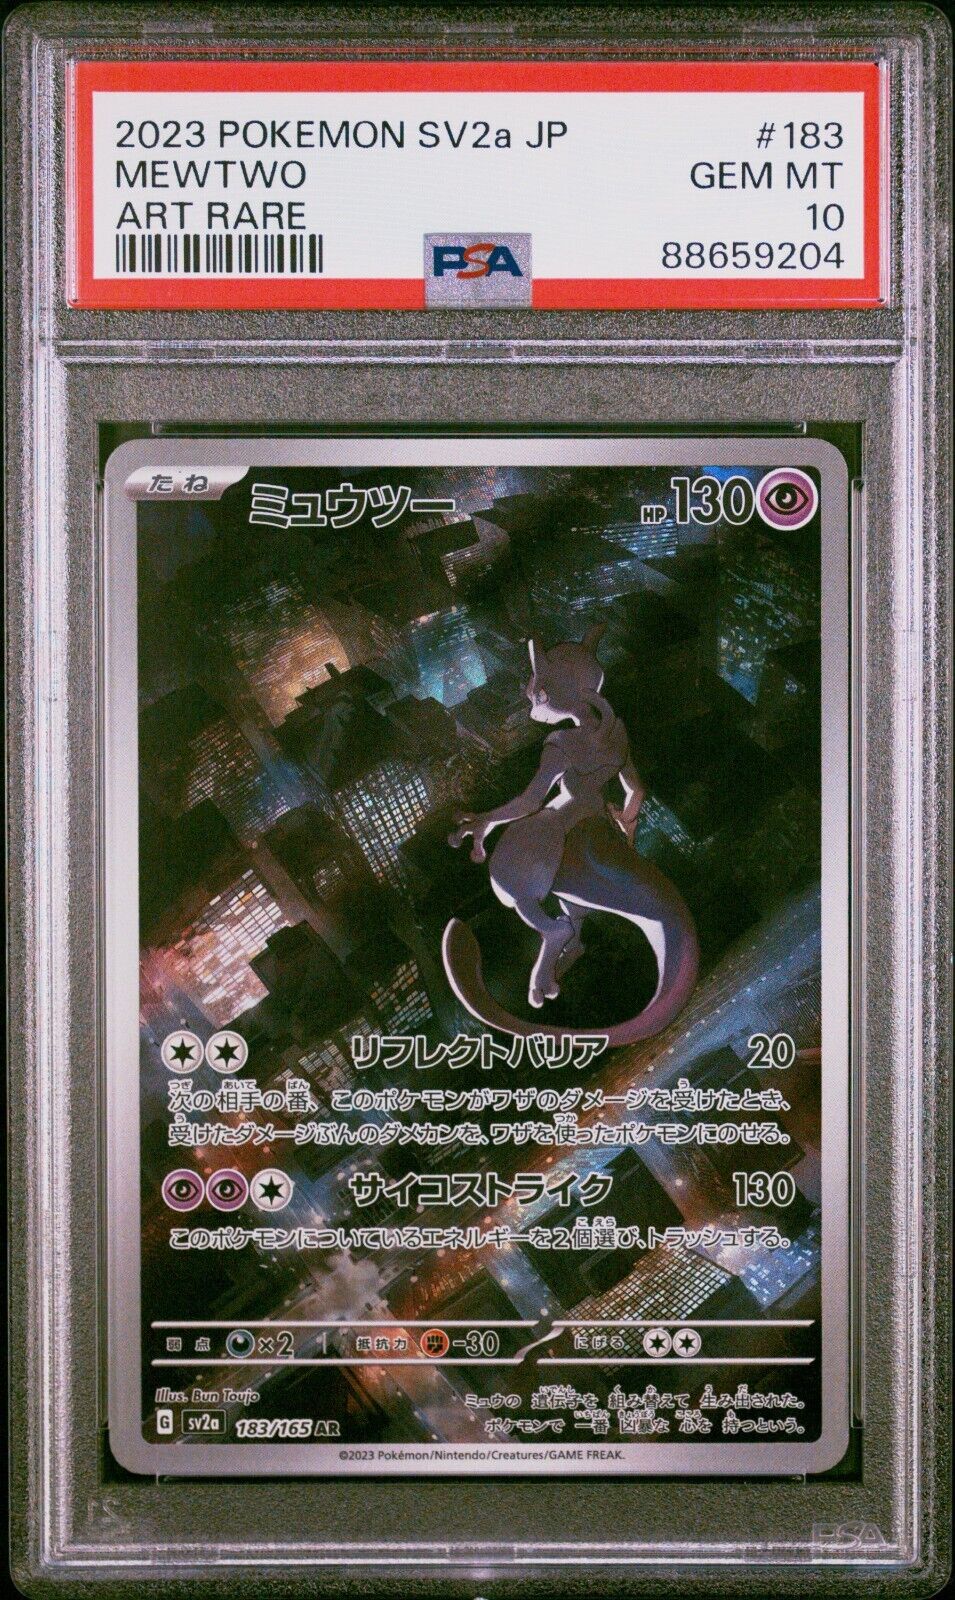 PSA 10 GEM MINT Mewtwo JAPANESE 151 #183 ART RARE Pokemon Card